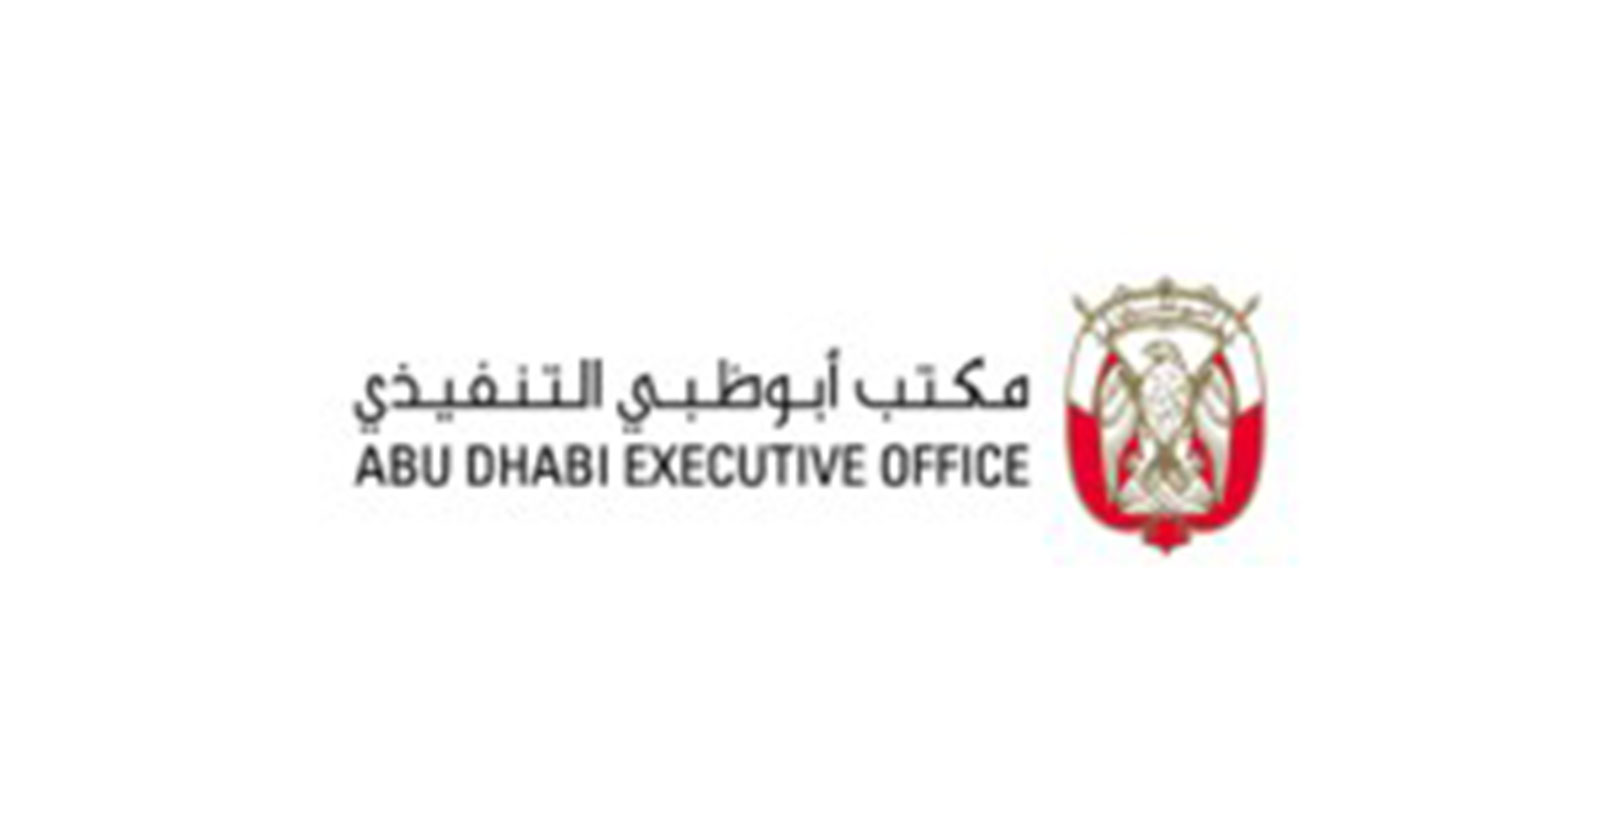 Abu Dhabi Executive Office (ADEO)